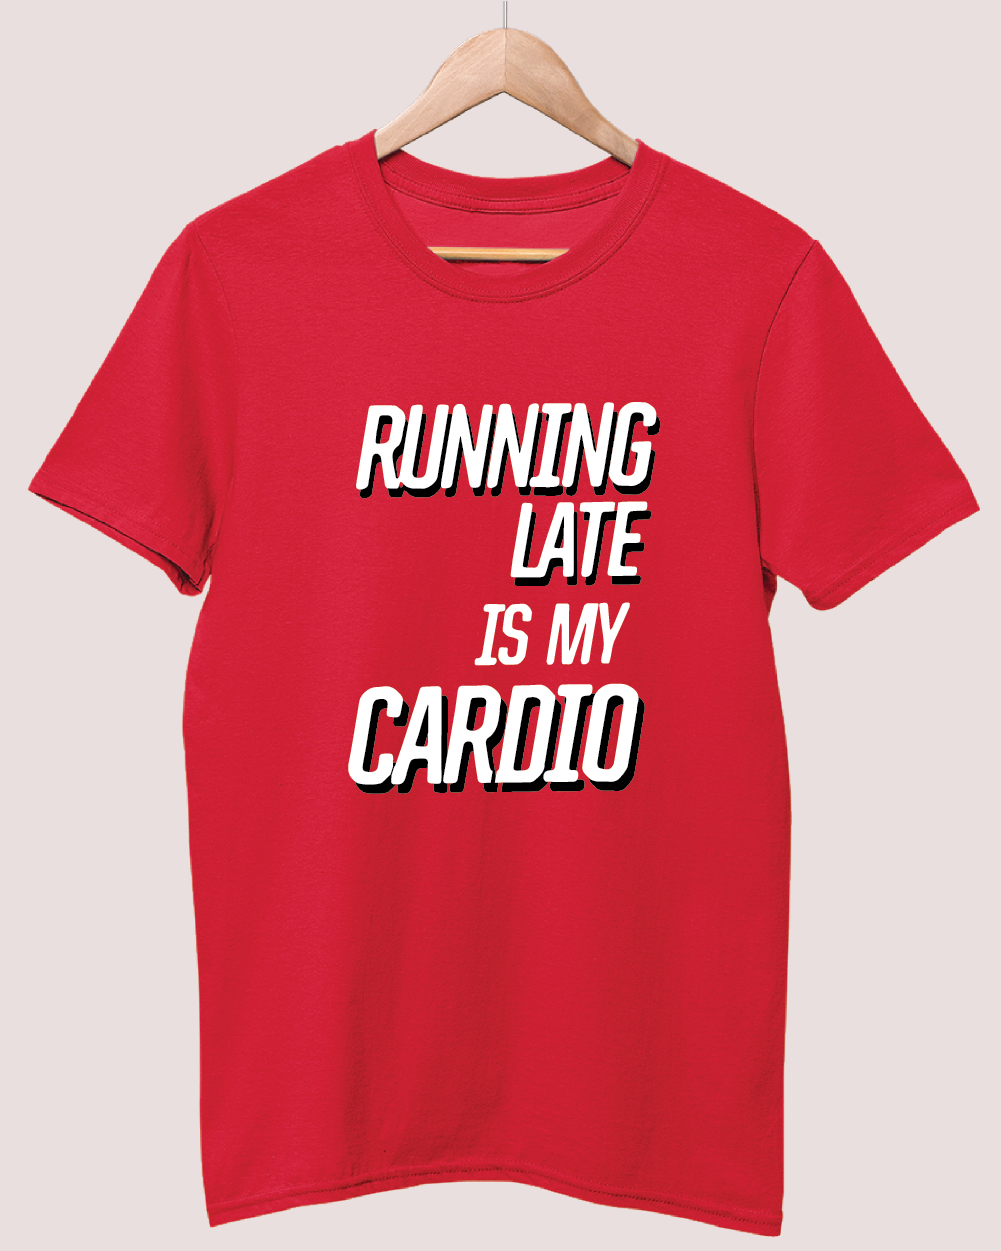 Running late is my cardio t-shirt